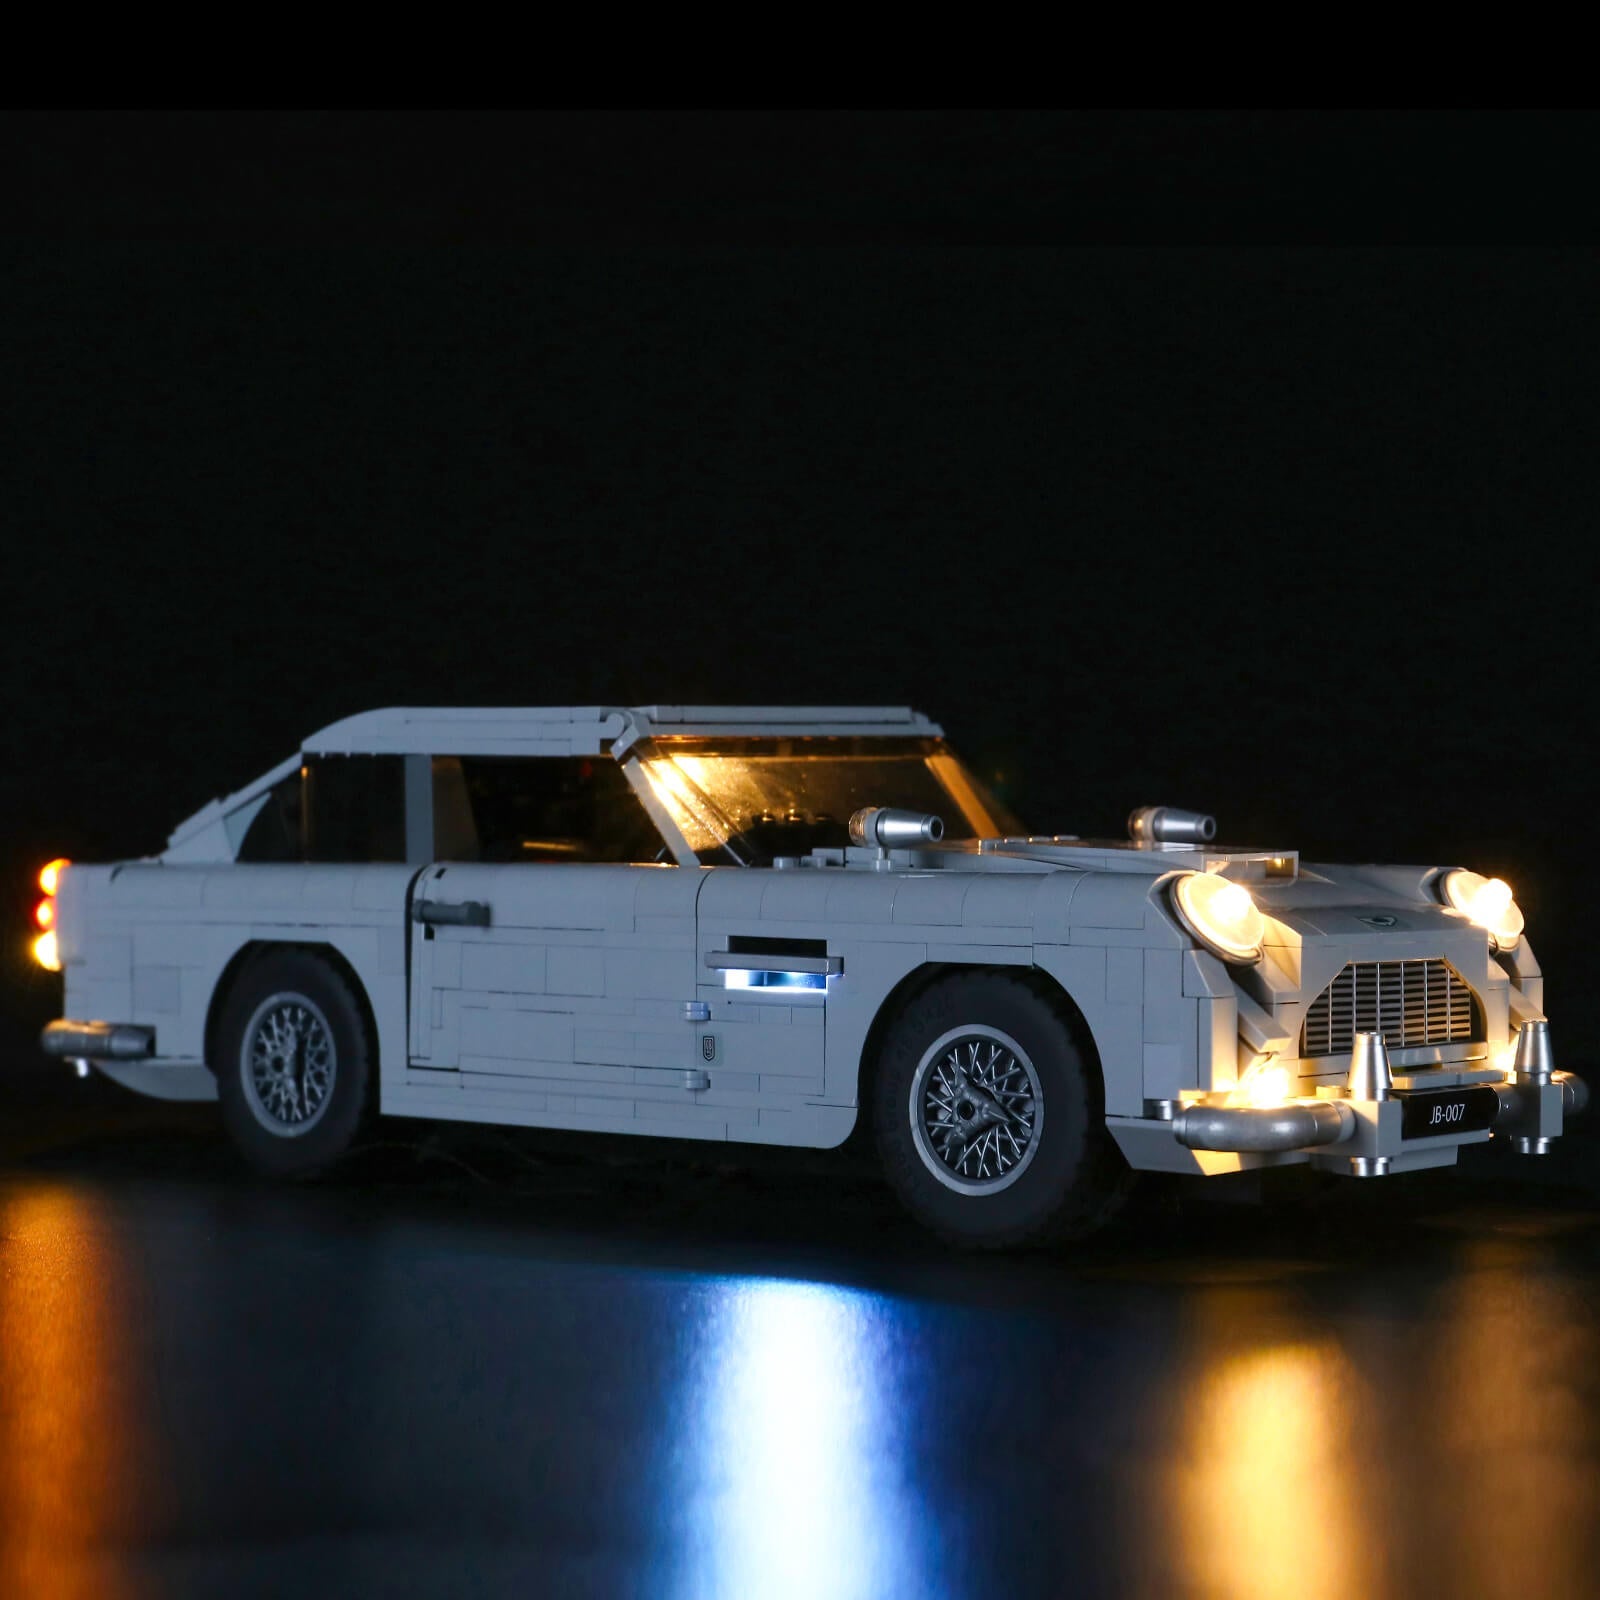 James Bond Aston Martin DB5 with lights